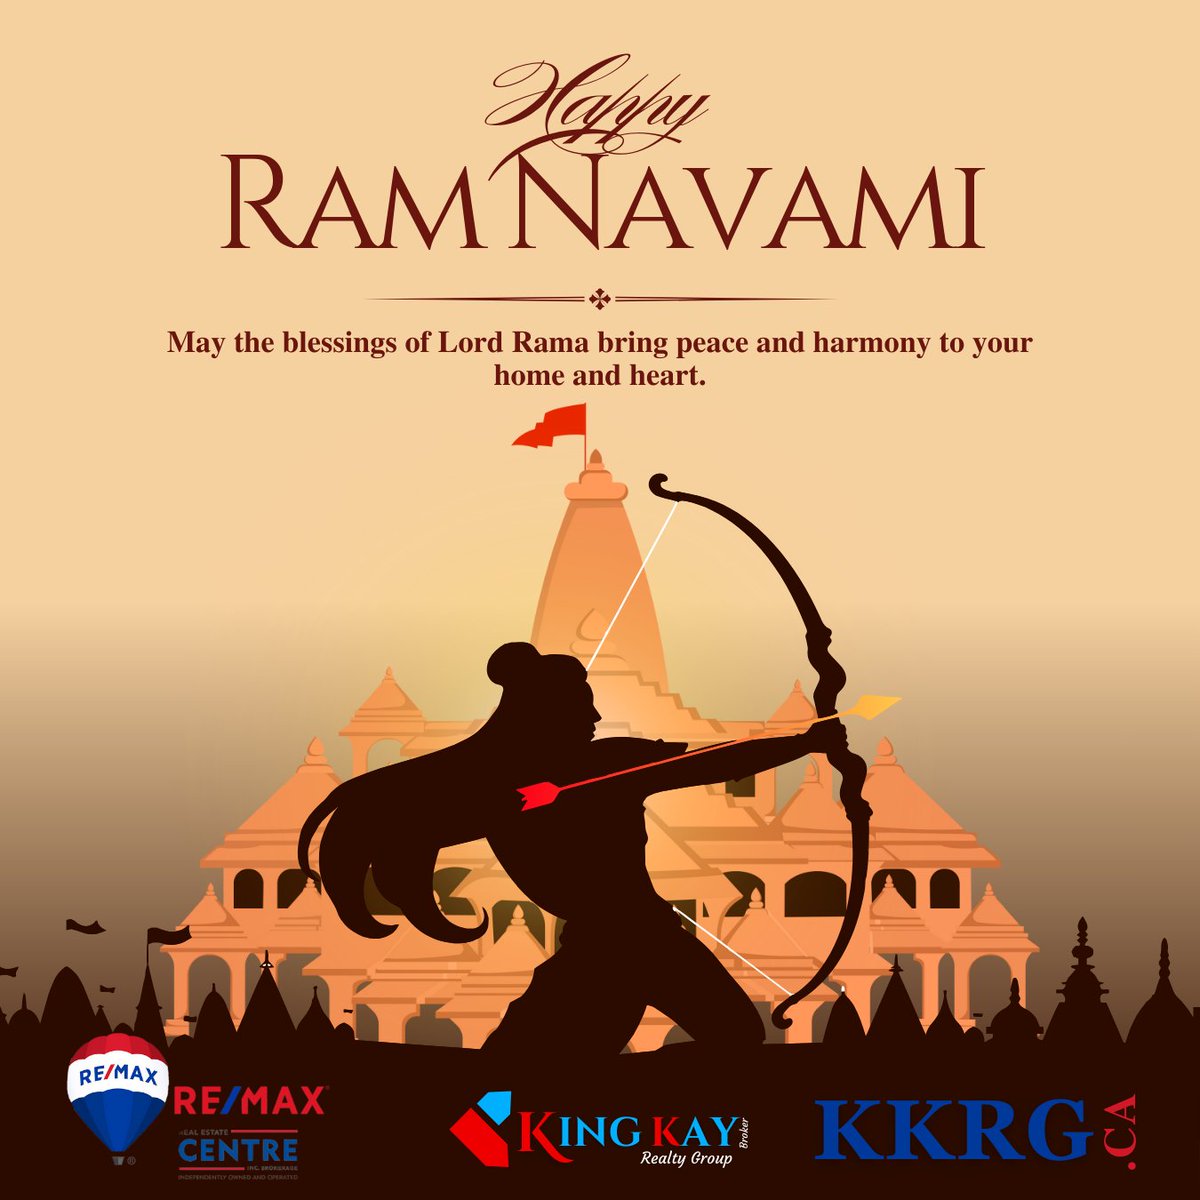 Happy Ram Navmi!!!